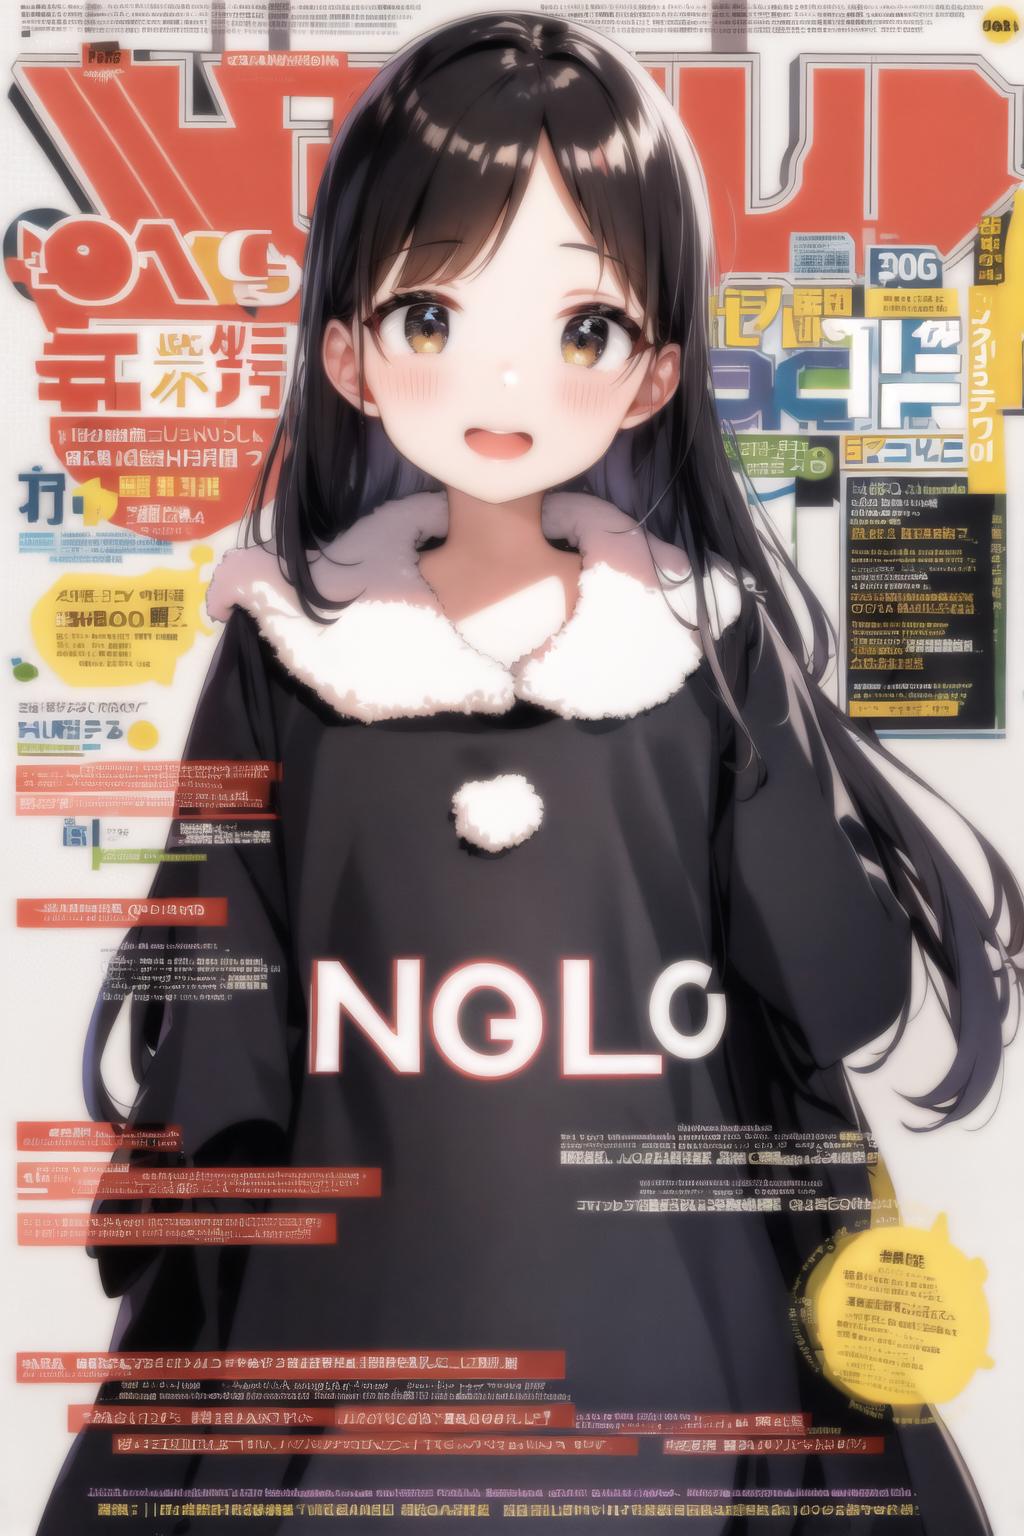 Manga Other Magazines | Mercari